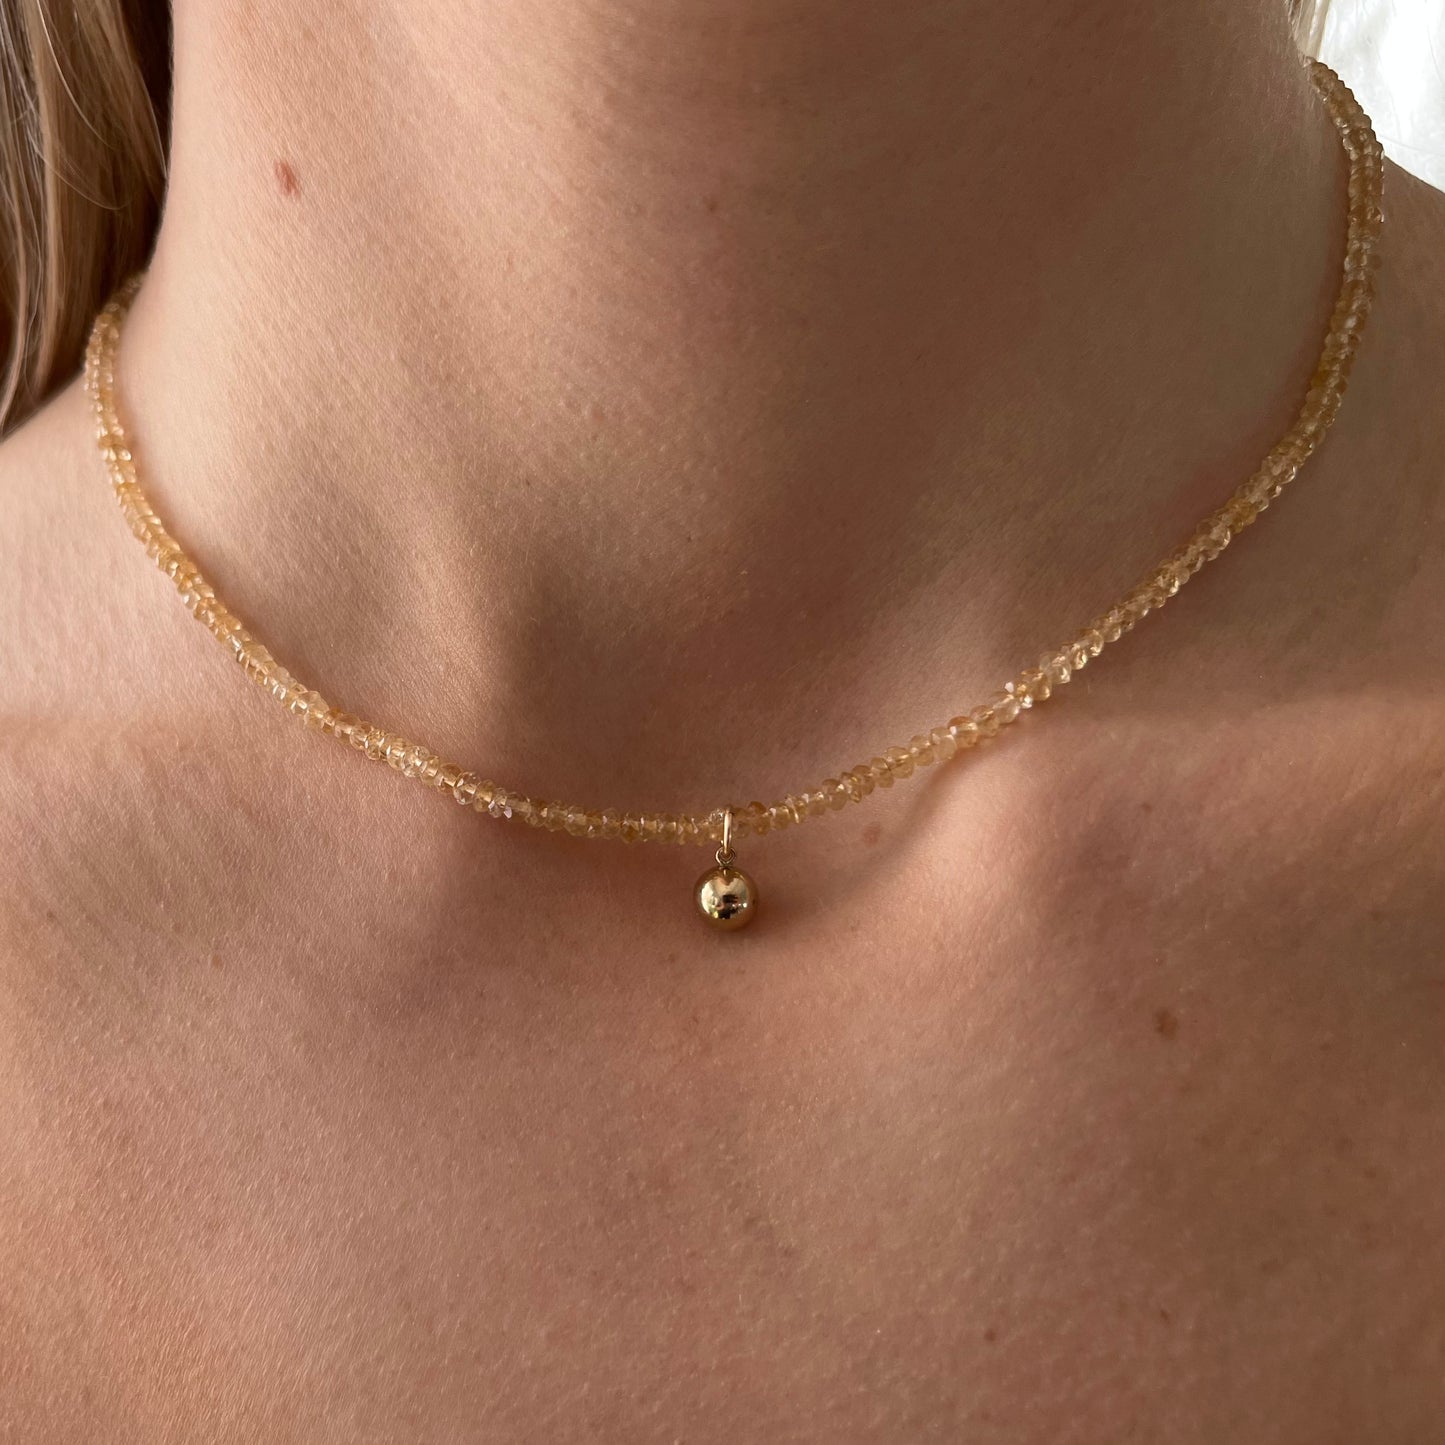 Citrine gemstone choker necklace